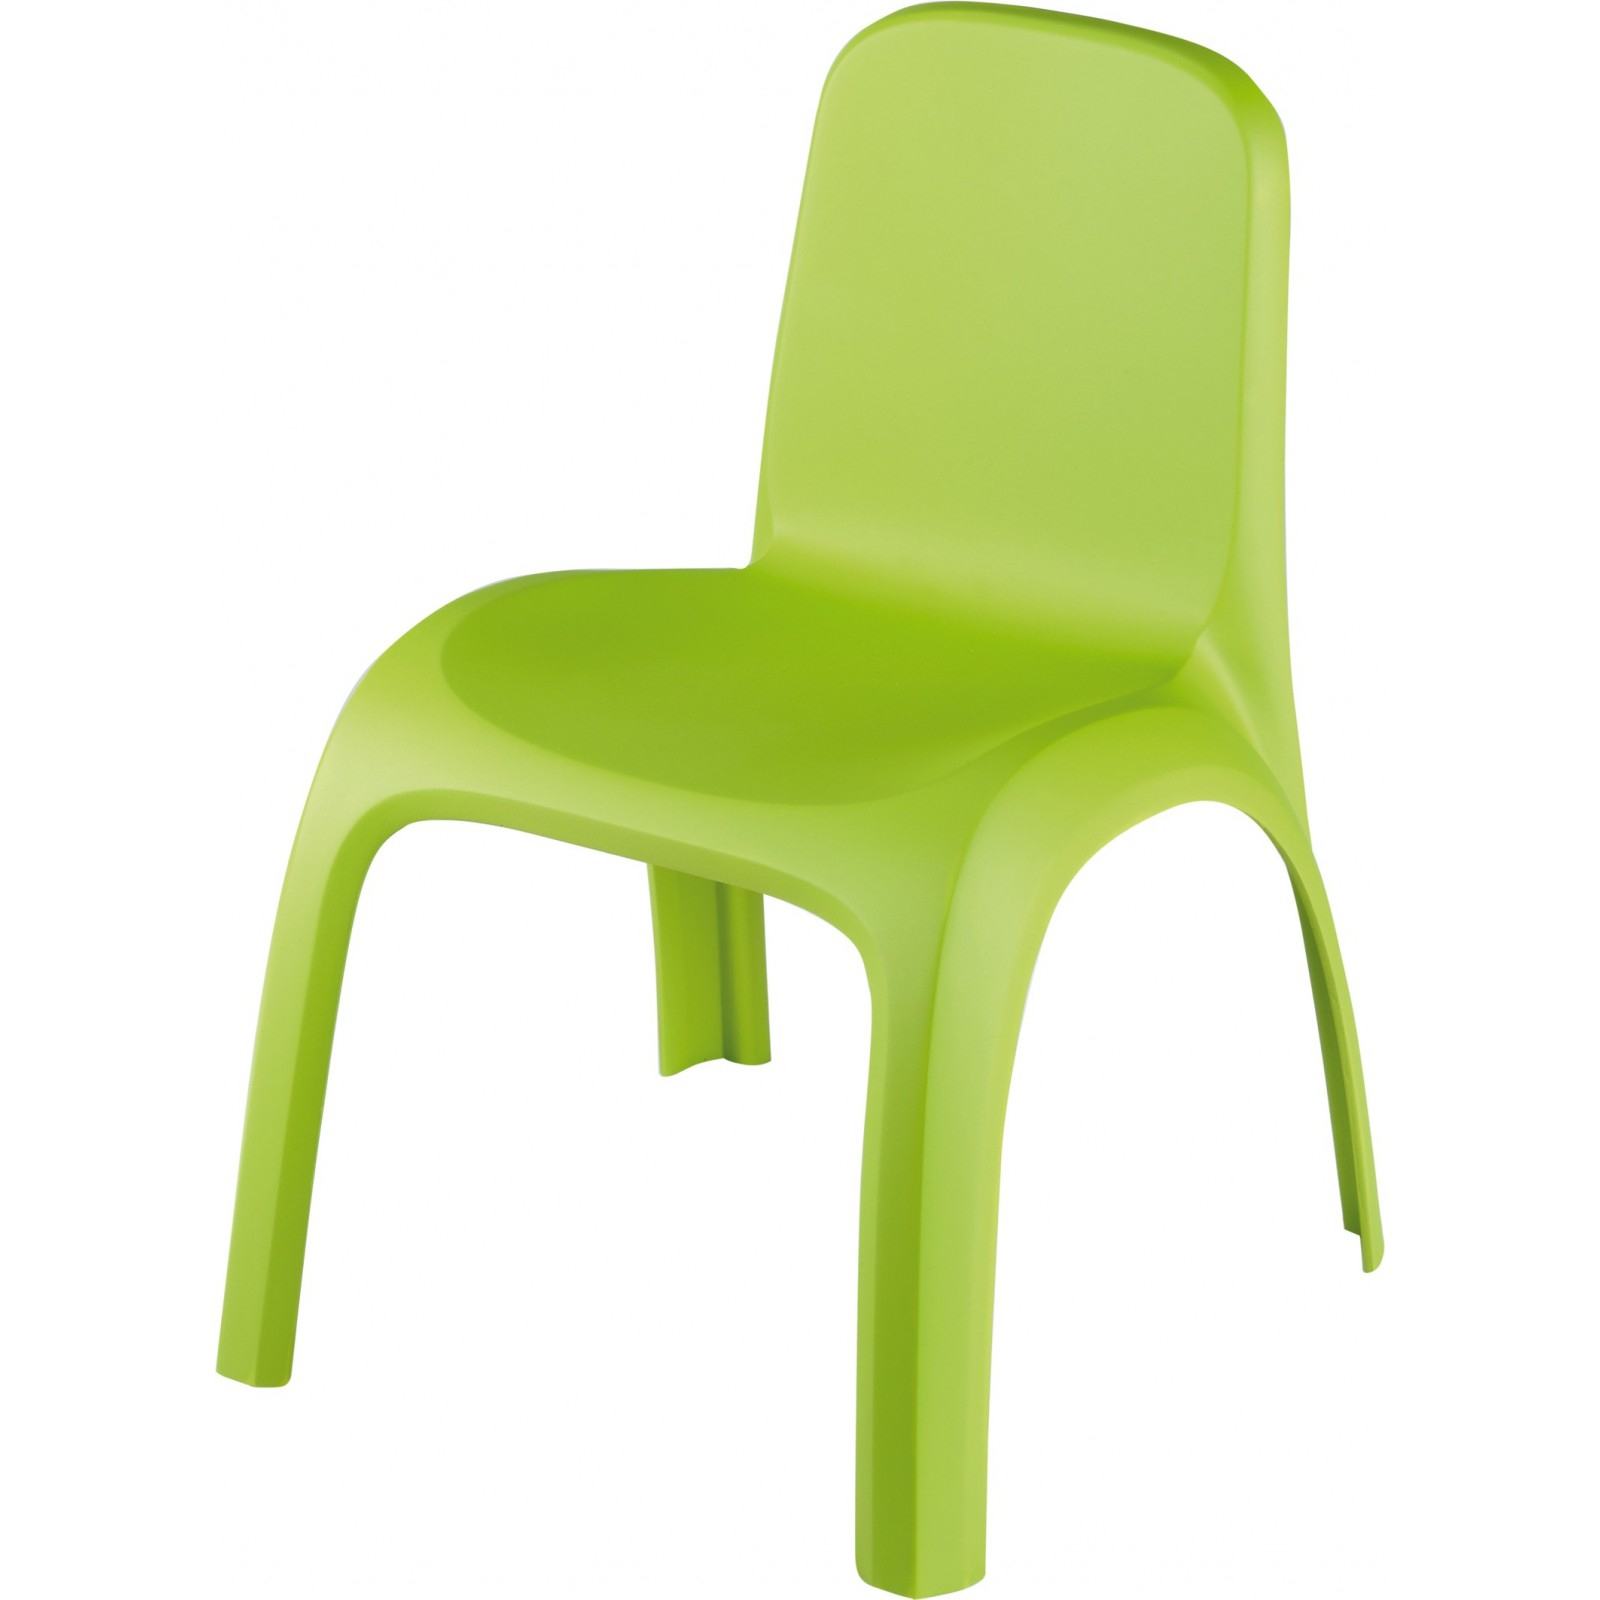 Детский стульчик Keter Monoblock Kids chair May Greenish (17185444732)